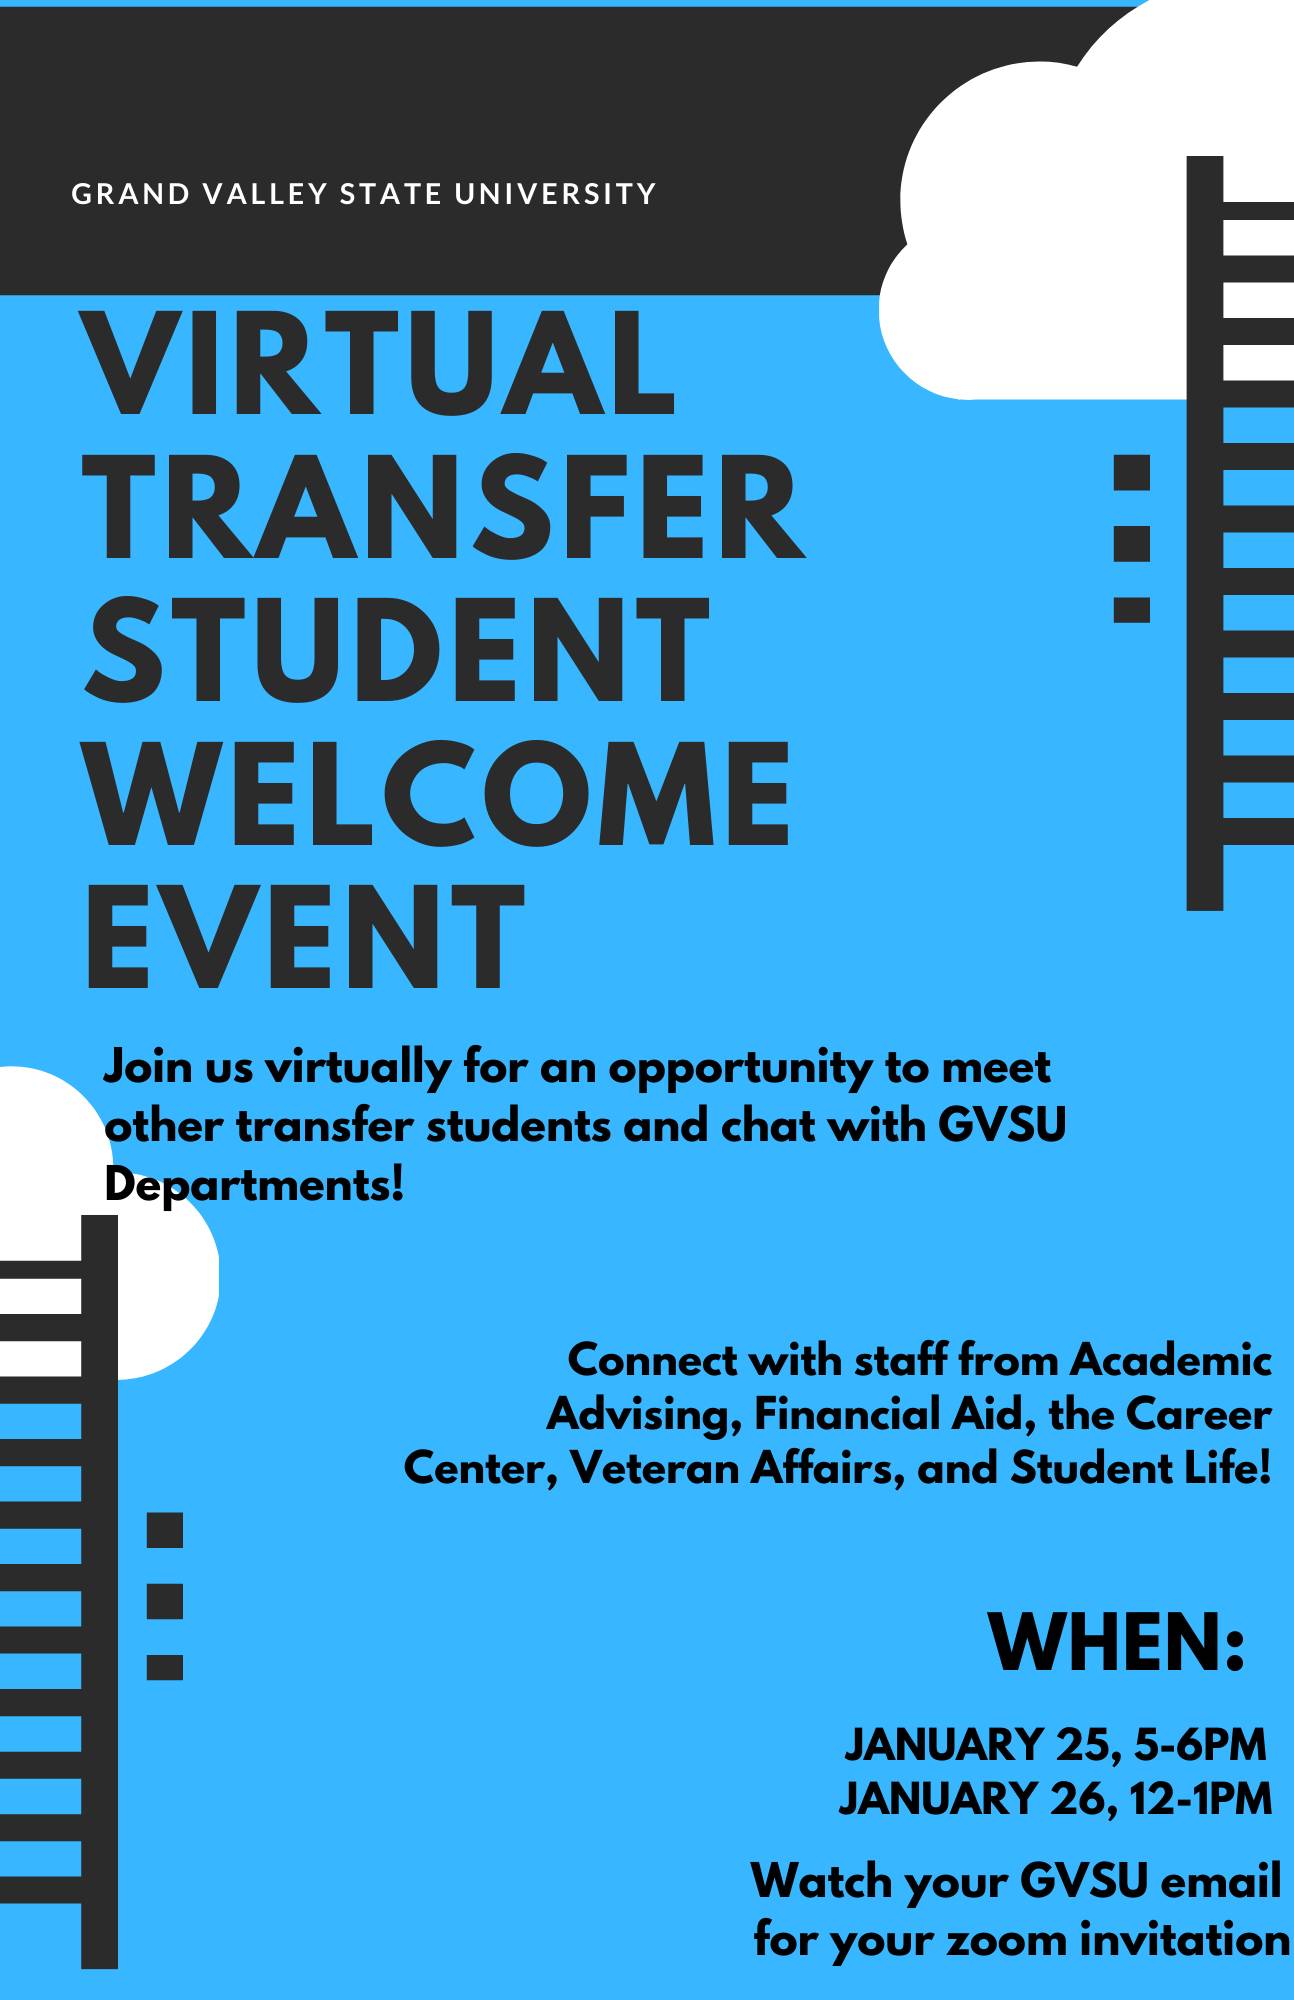 Transfer Student Advising